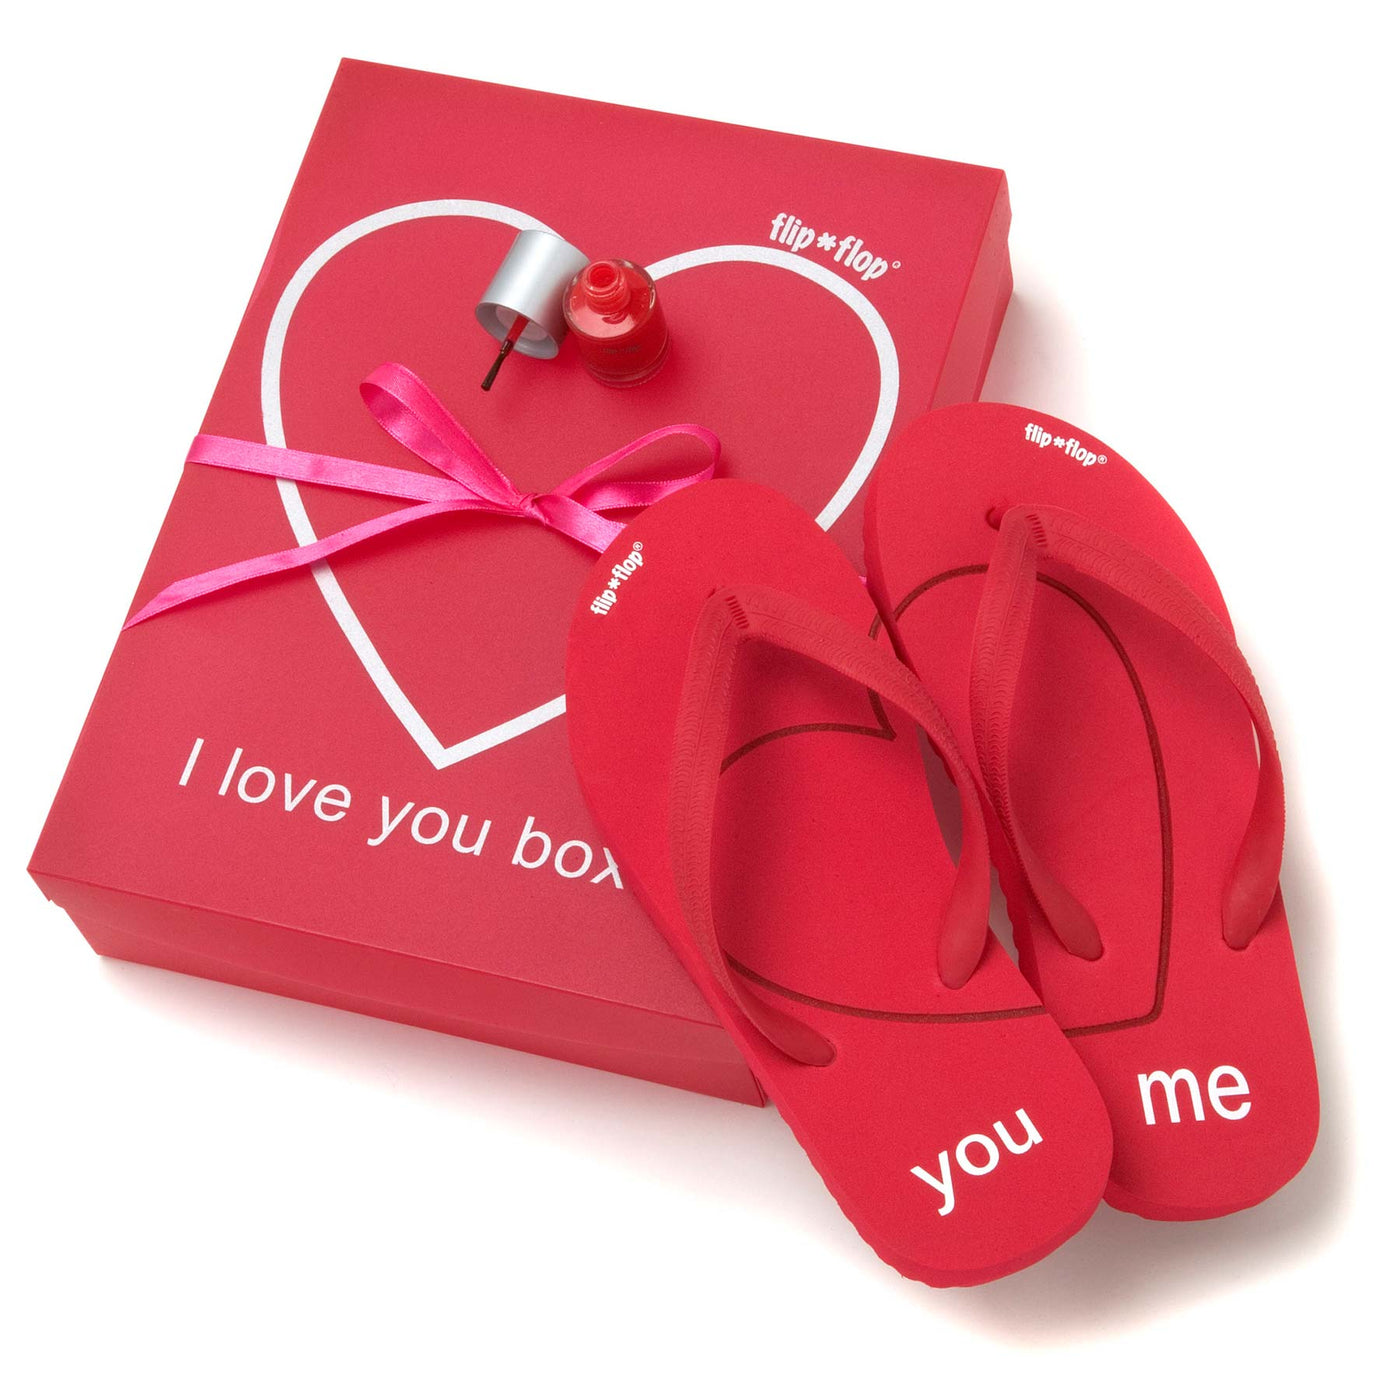 flip*flop Originals "I love you box" Special-Edition